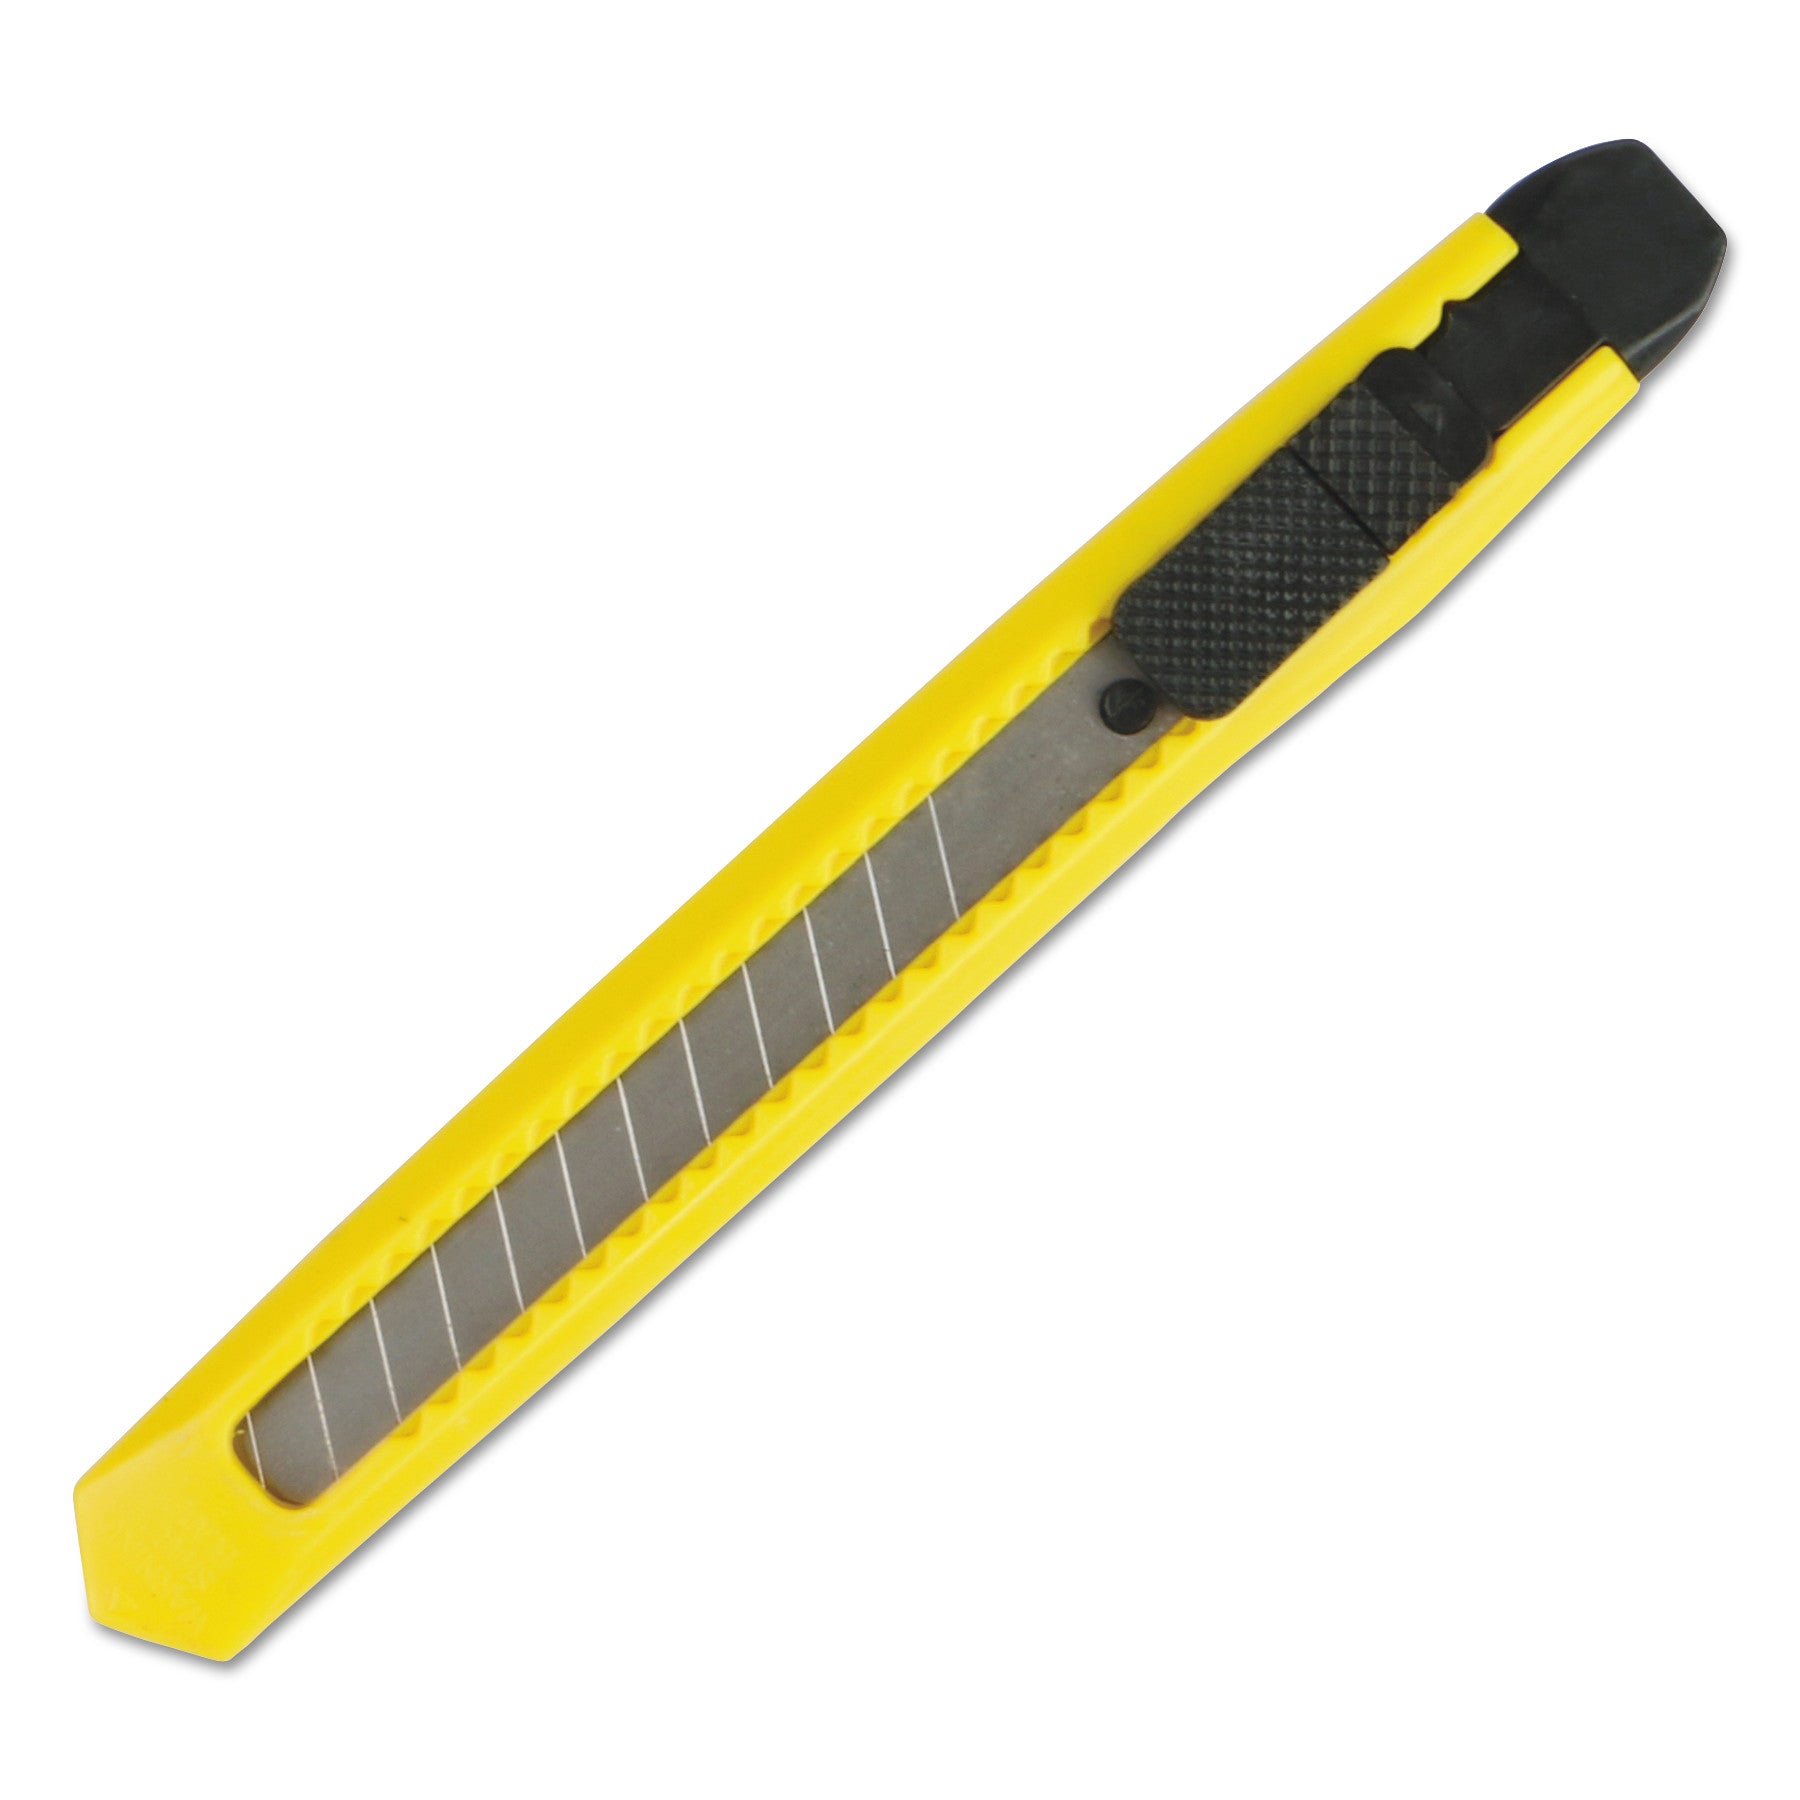 snap-blade-knife-retractable-snap-off-039-blade-5-plastic-handle-yellow_bwkuknife75 - 1